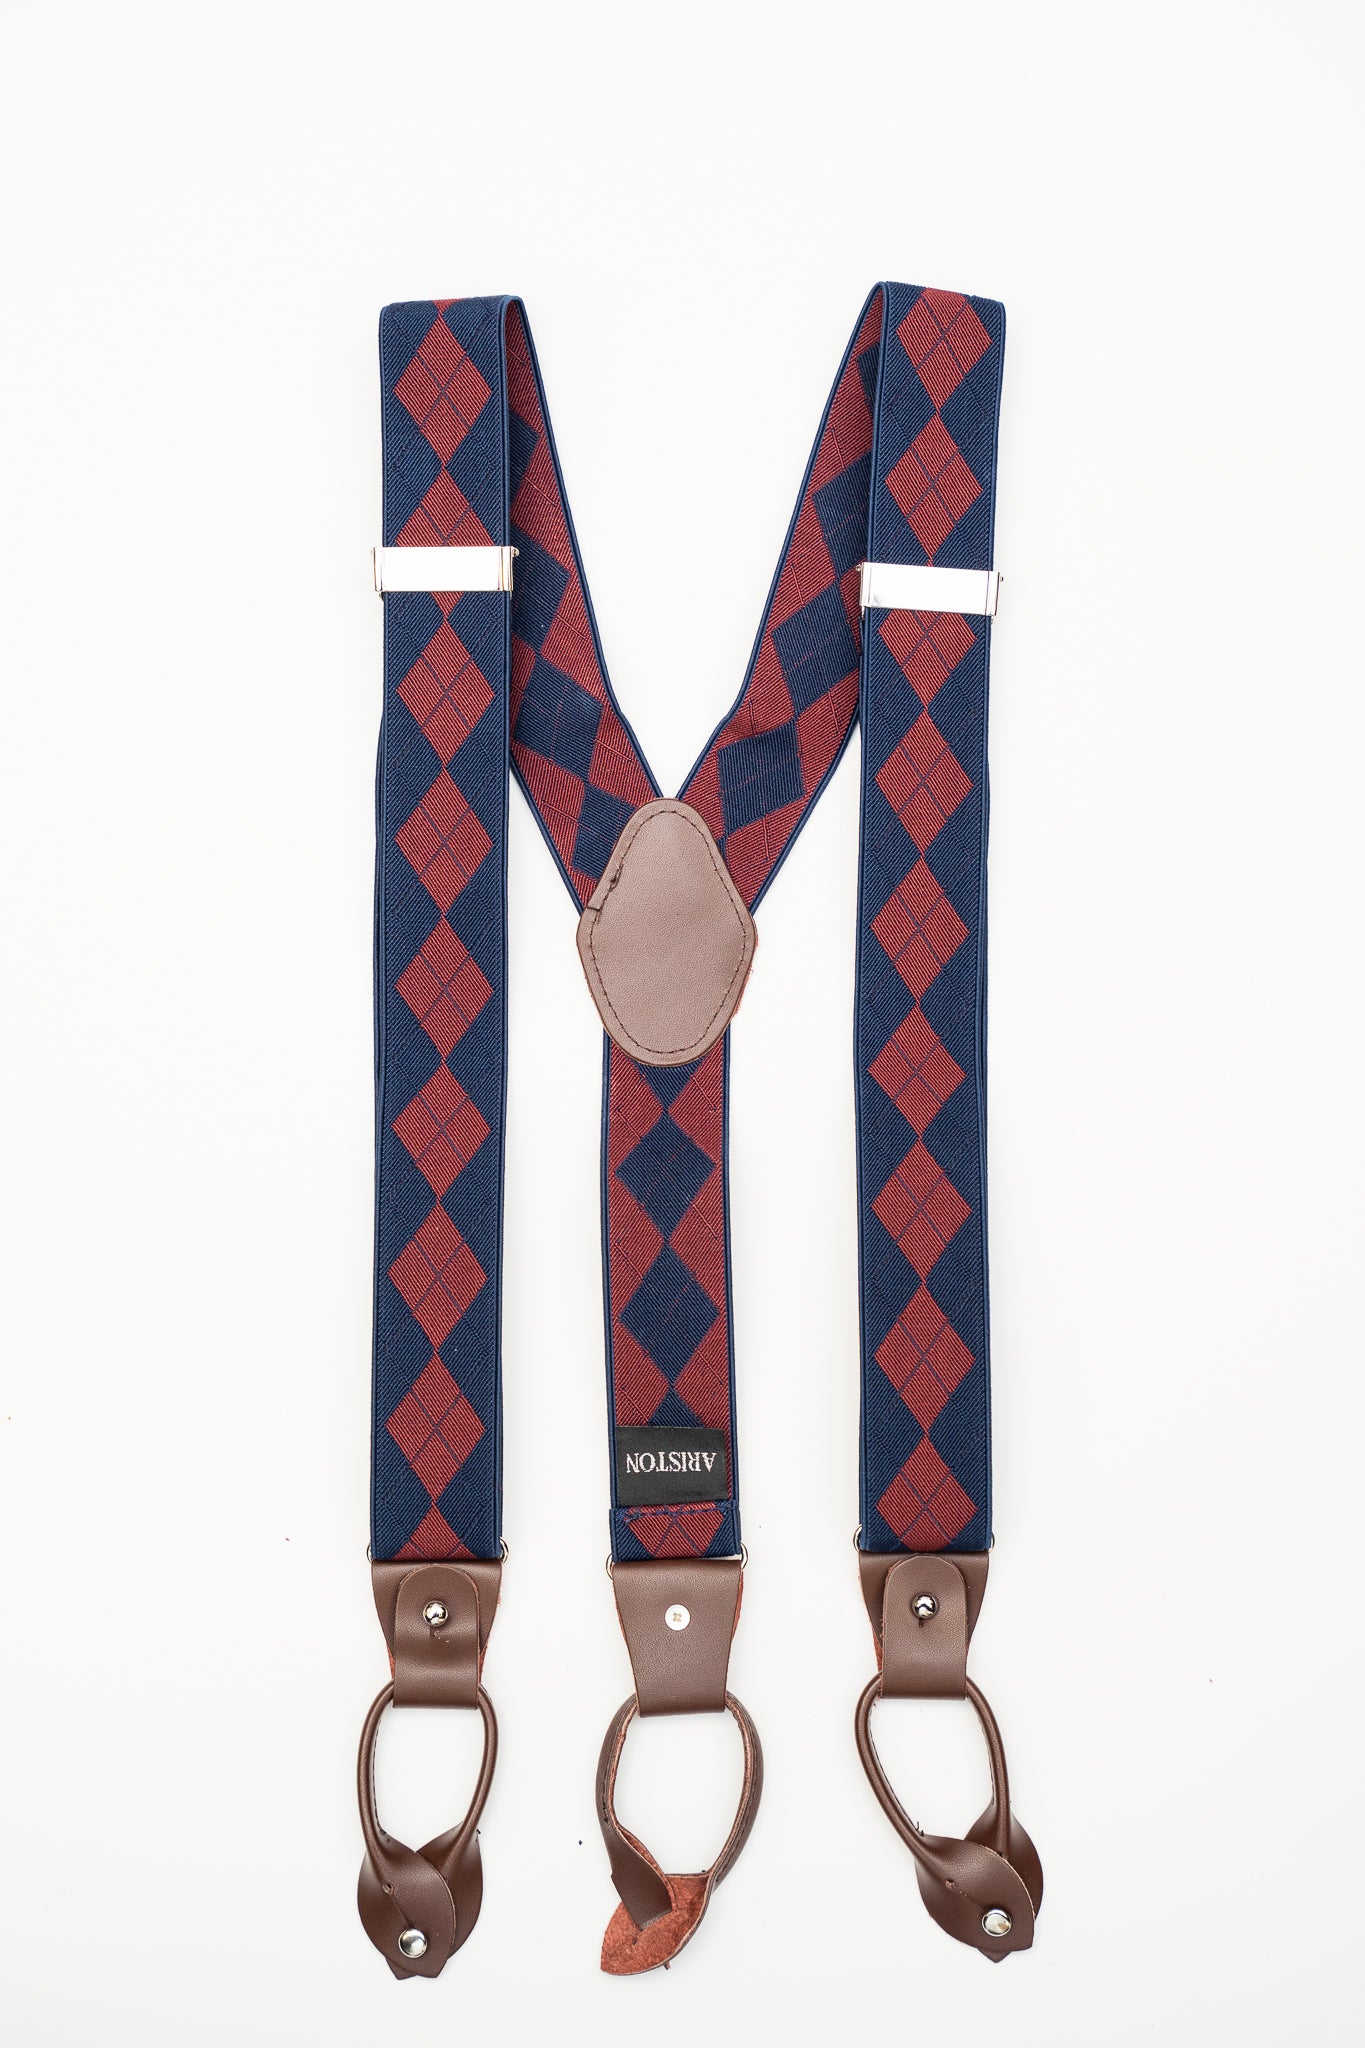 Asstd National Brand Status 1 Button Suspenders, $26, jcpenney